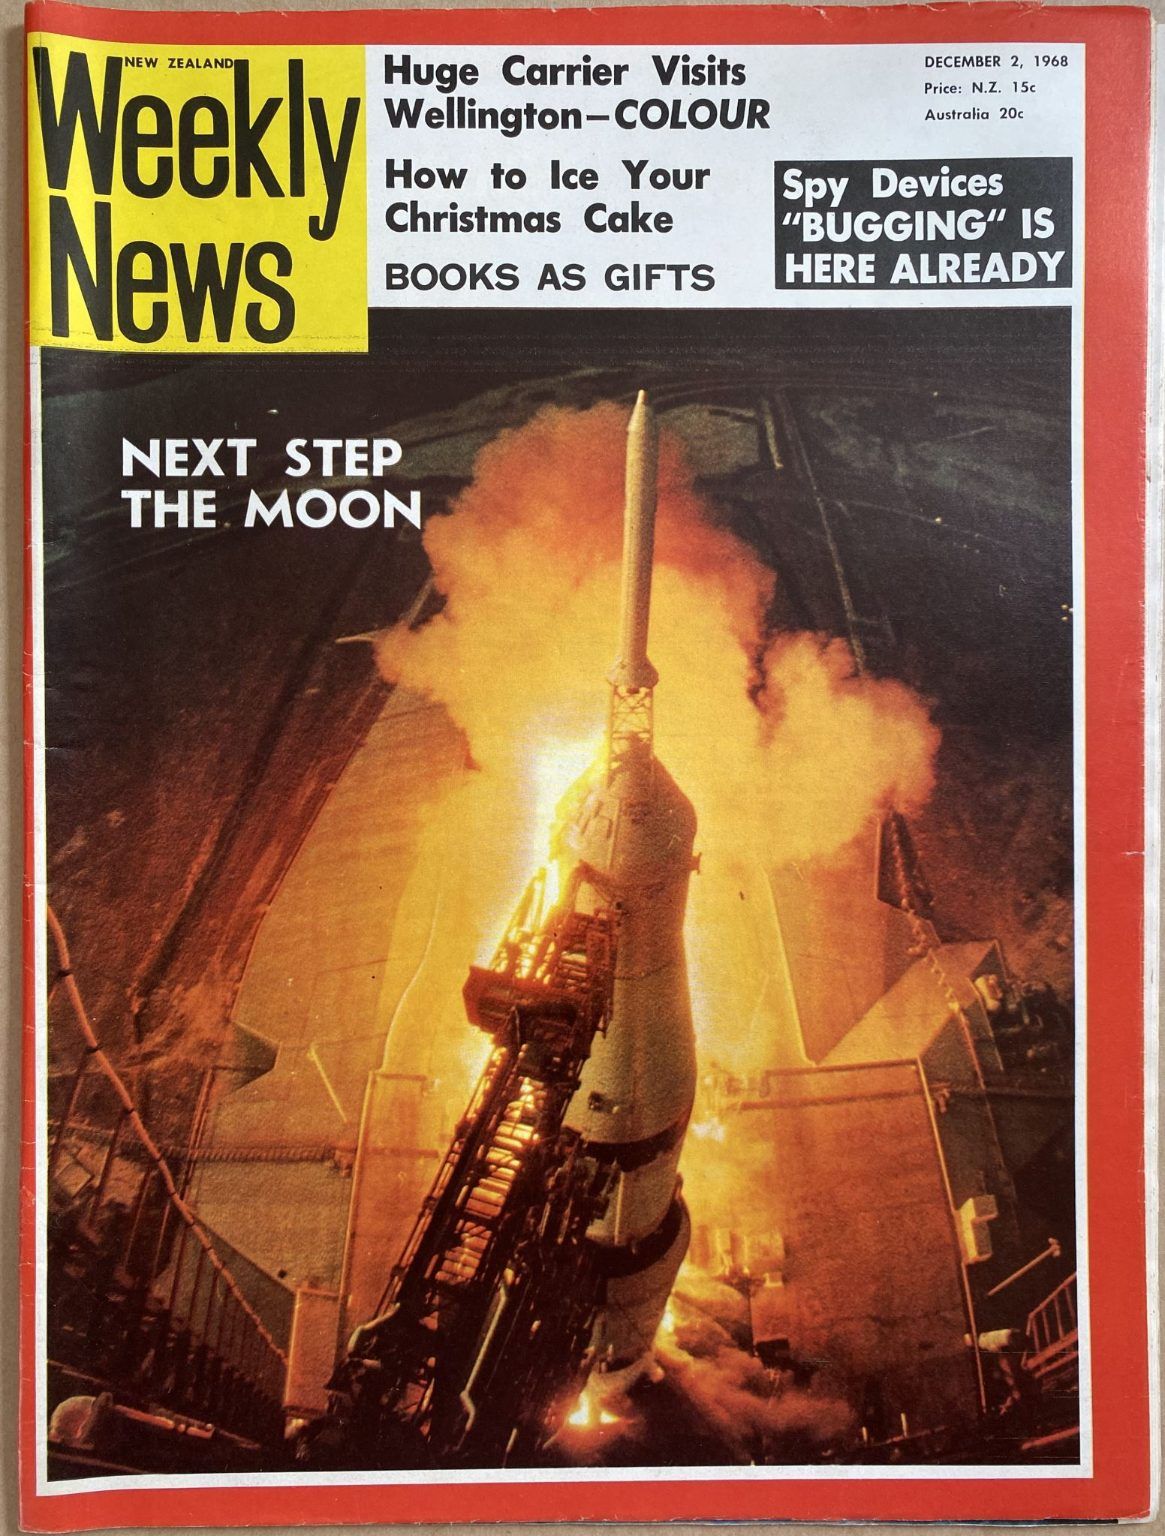 OLD NEWSPAPER: New Zealand Weekly News, 2 December 1968